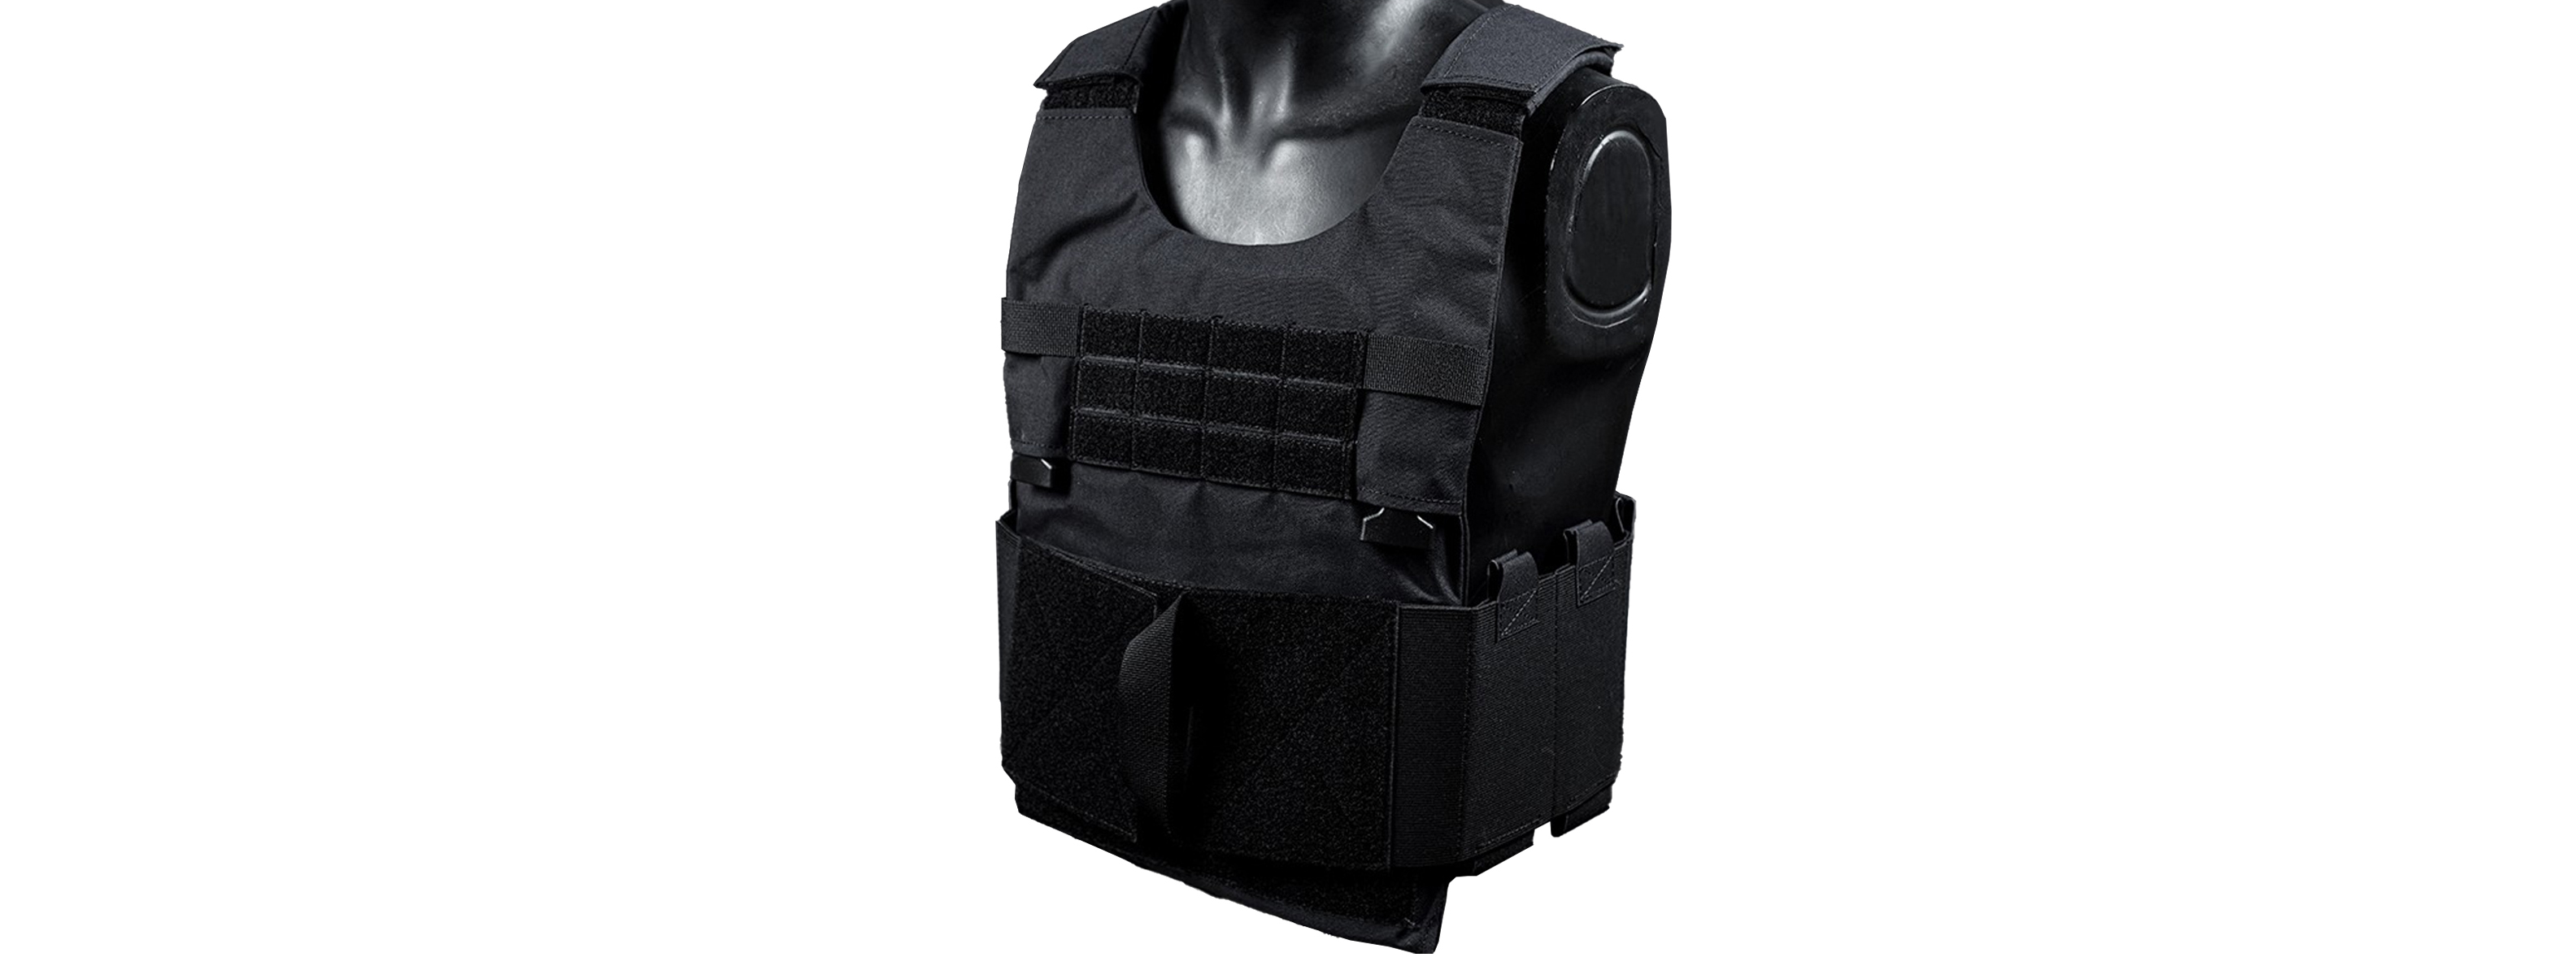 Airsoft Tactical Vest Carrier - (Black)